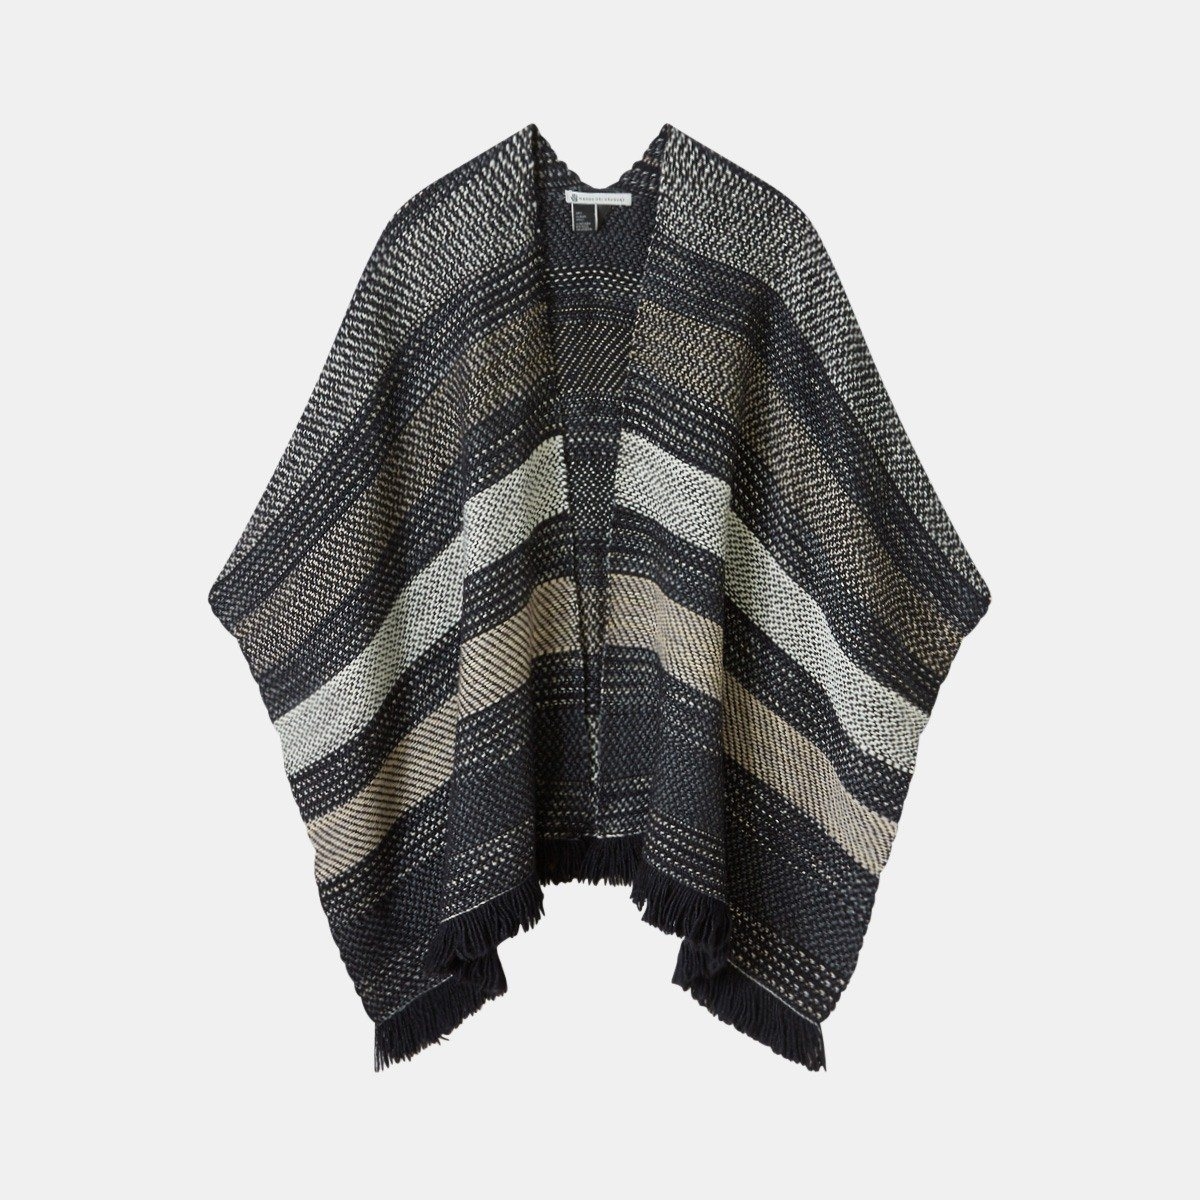 Aessai Knitwear Ramone Wrap in Black / Grey – Merino wool – One Size – Aessai